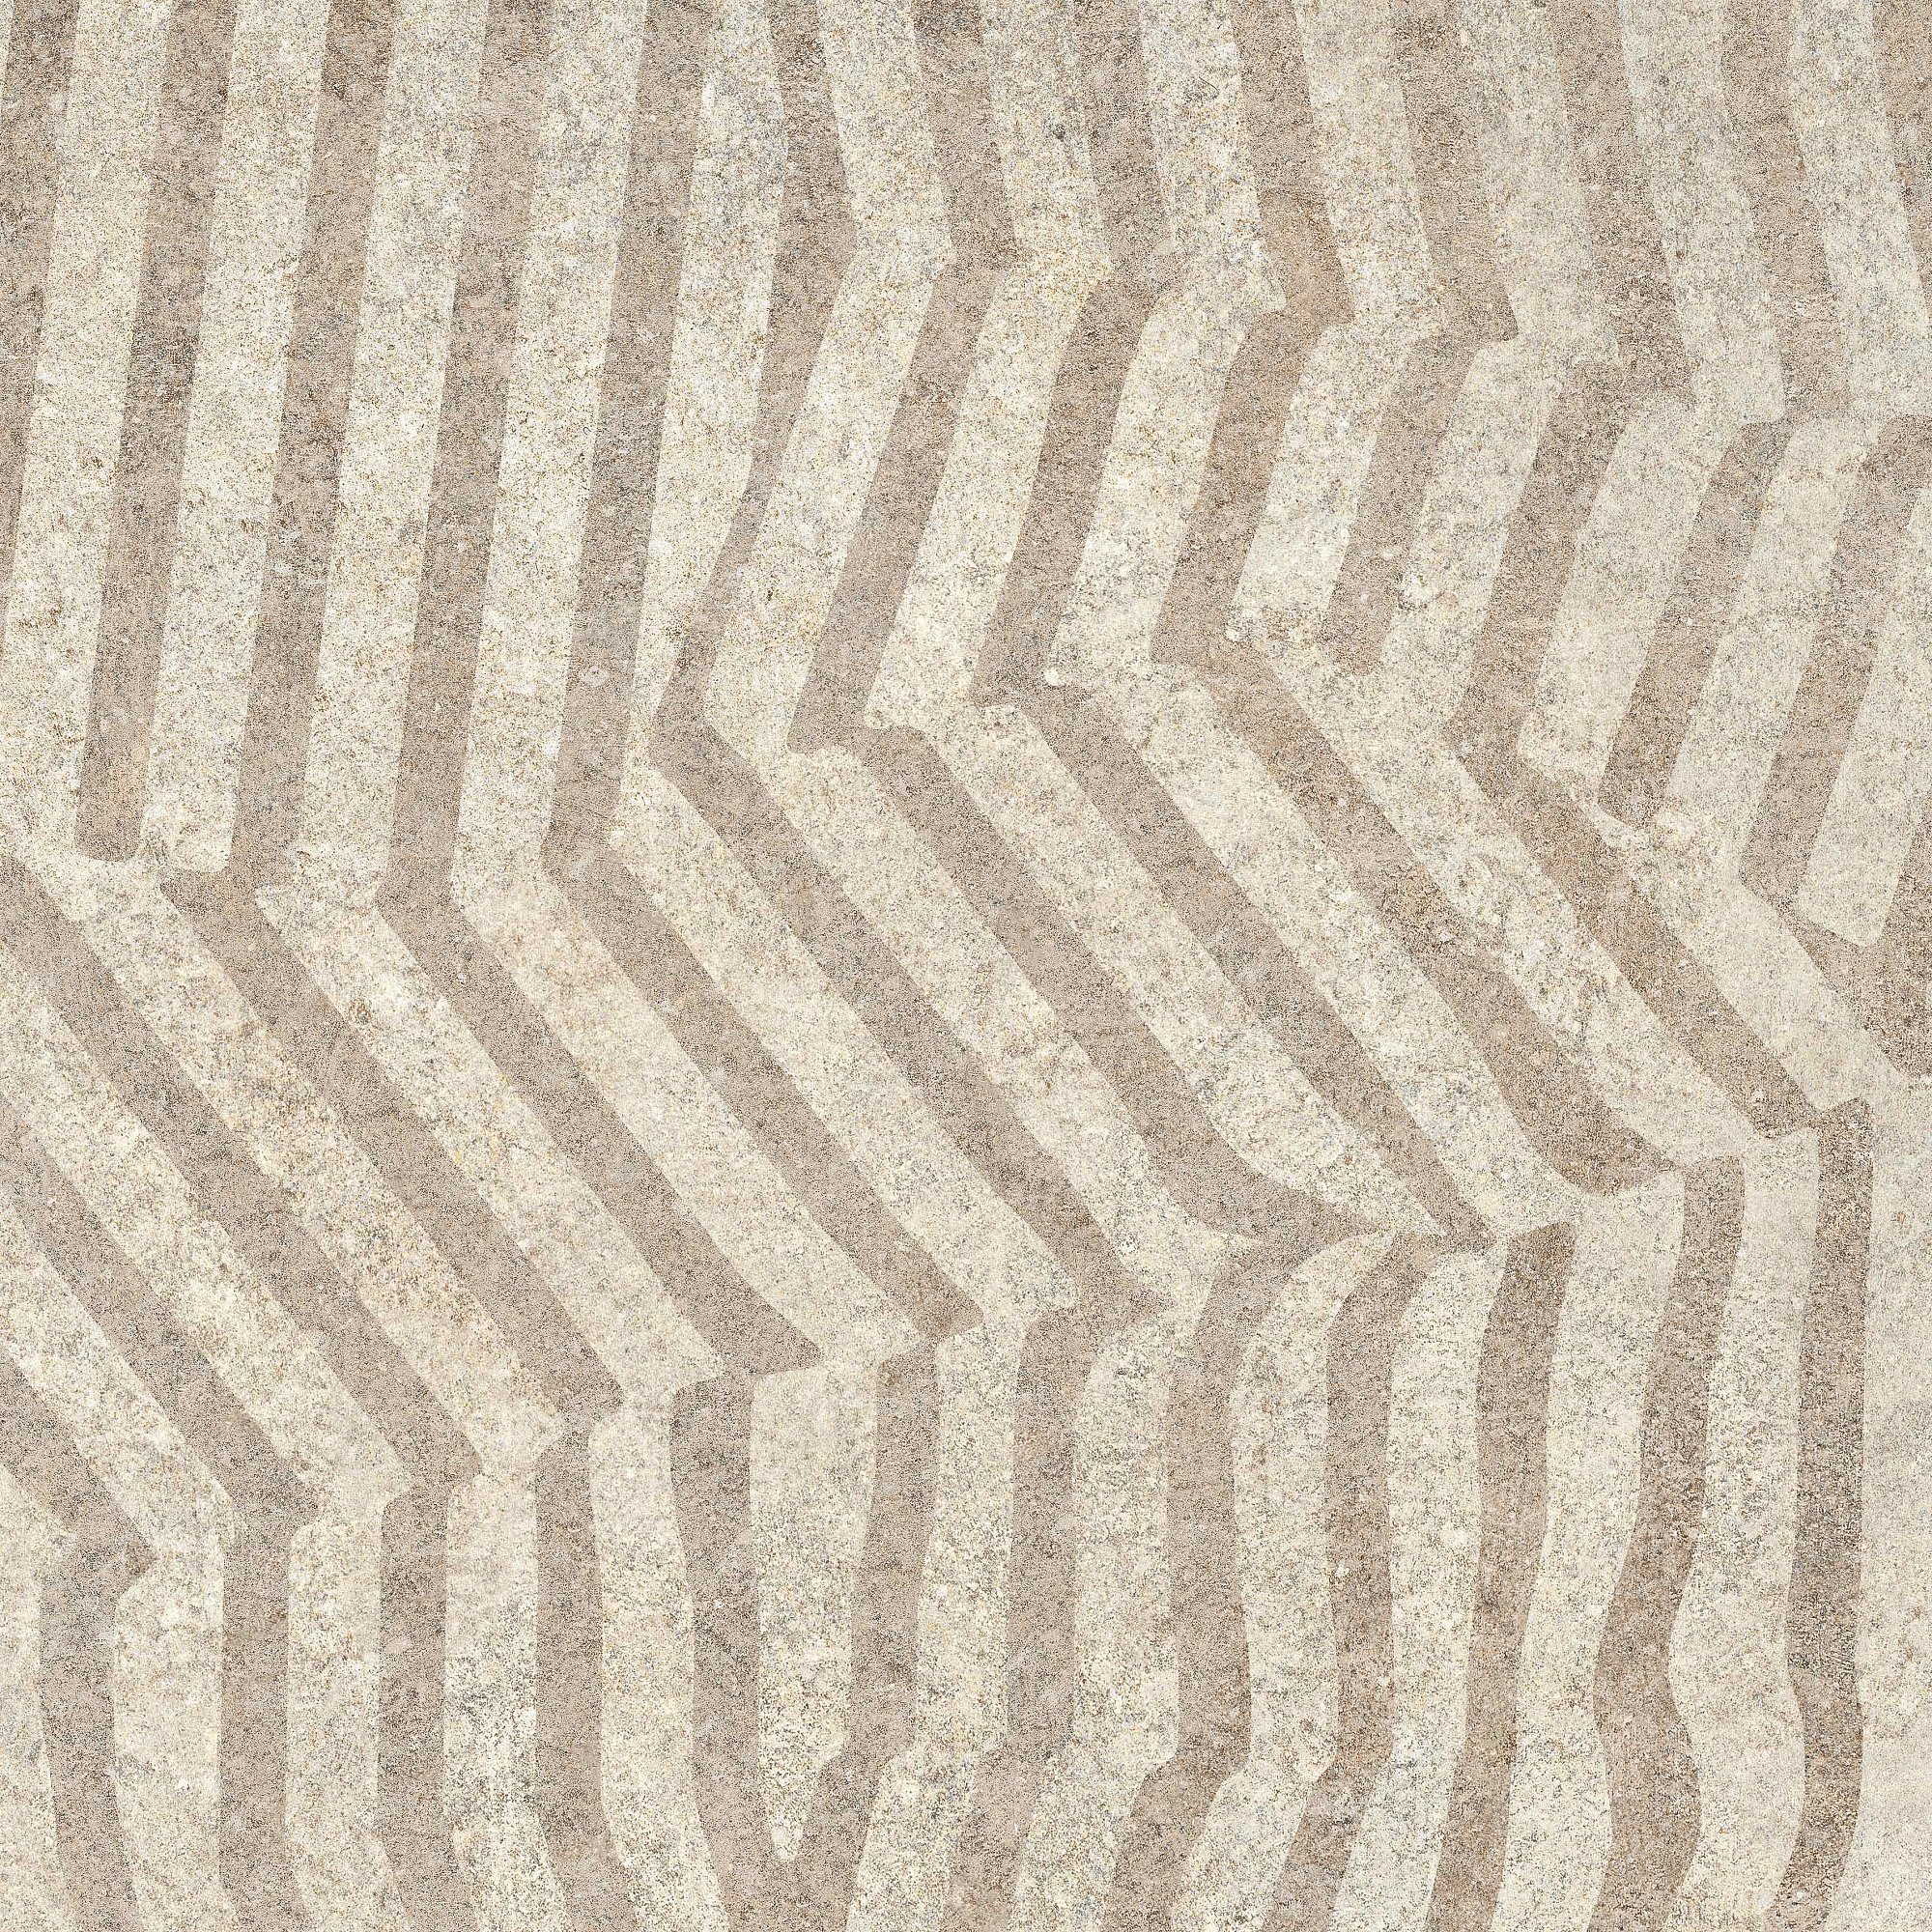 Керамогранит Vitra Декор Stone-X Геометрический Теплый Мат. R10 60х60 - изображение 4